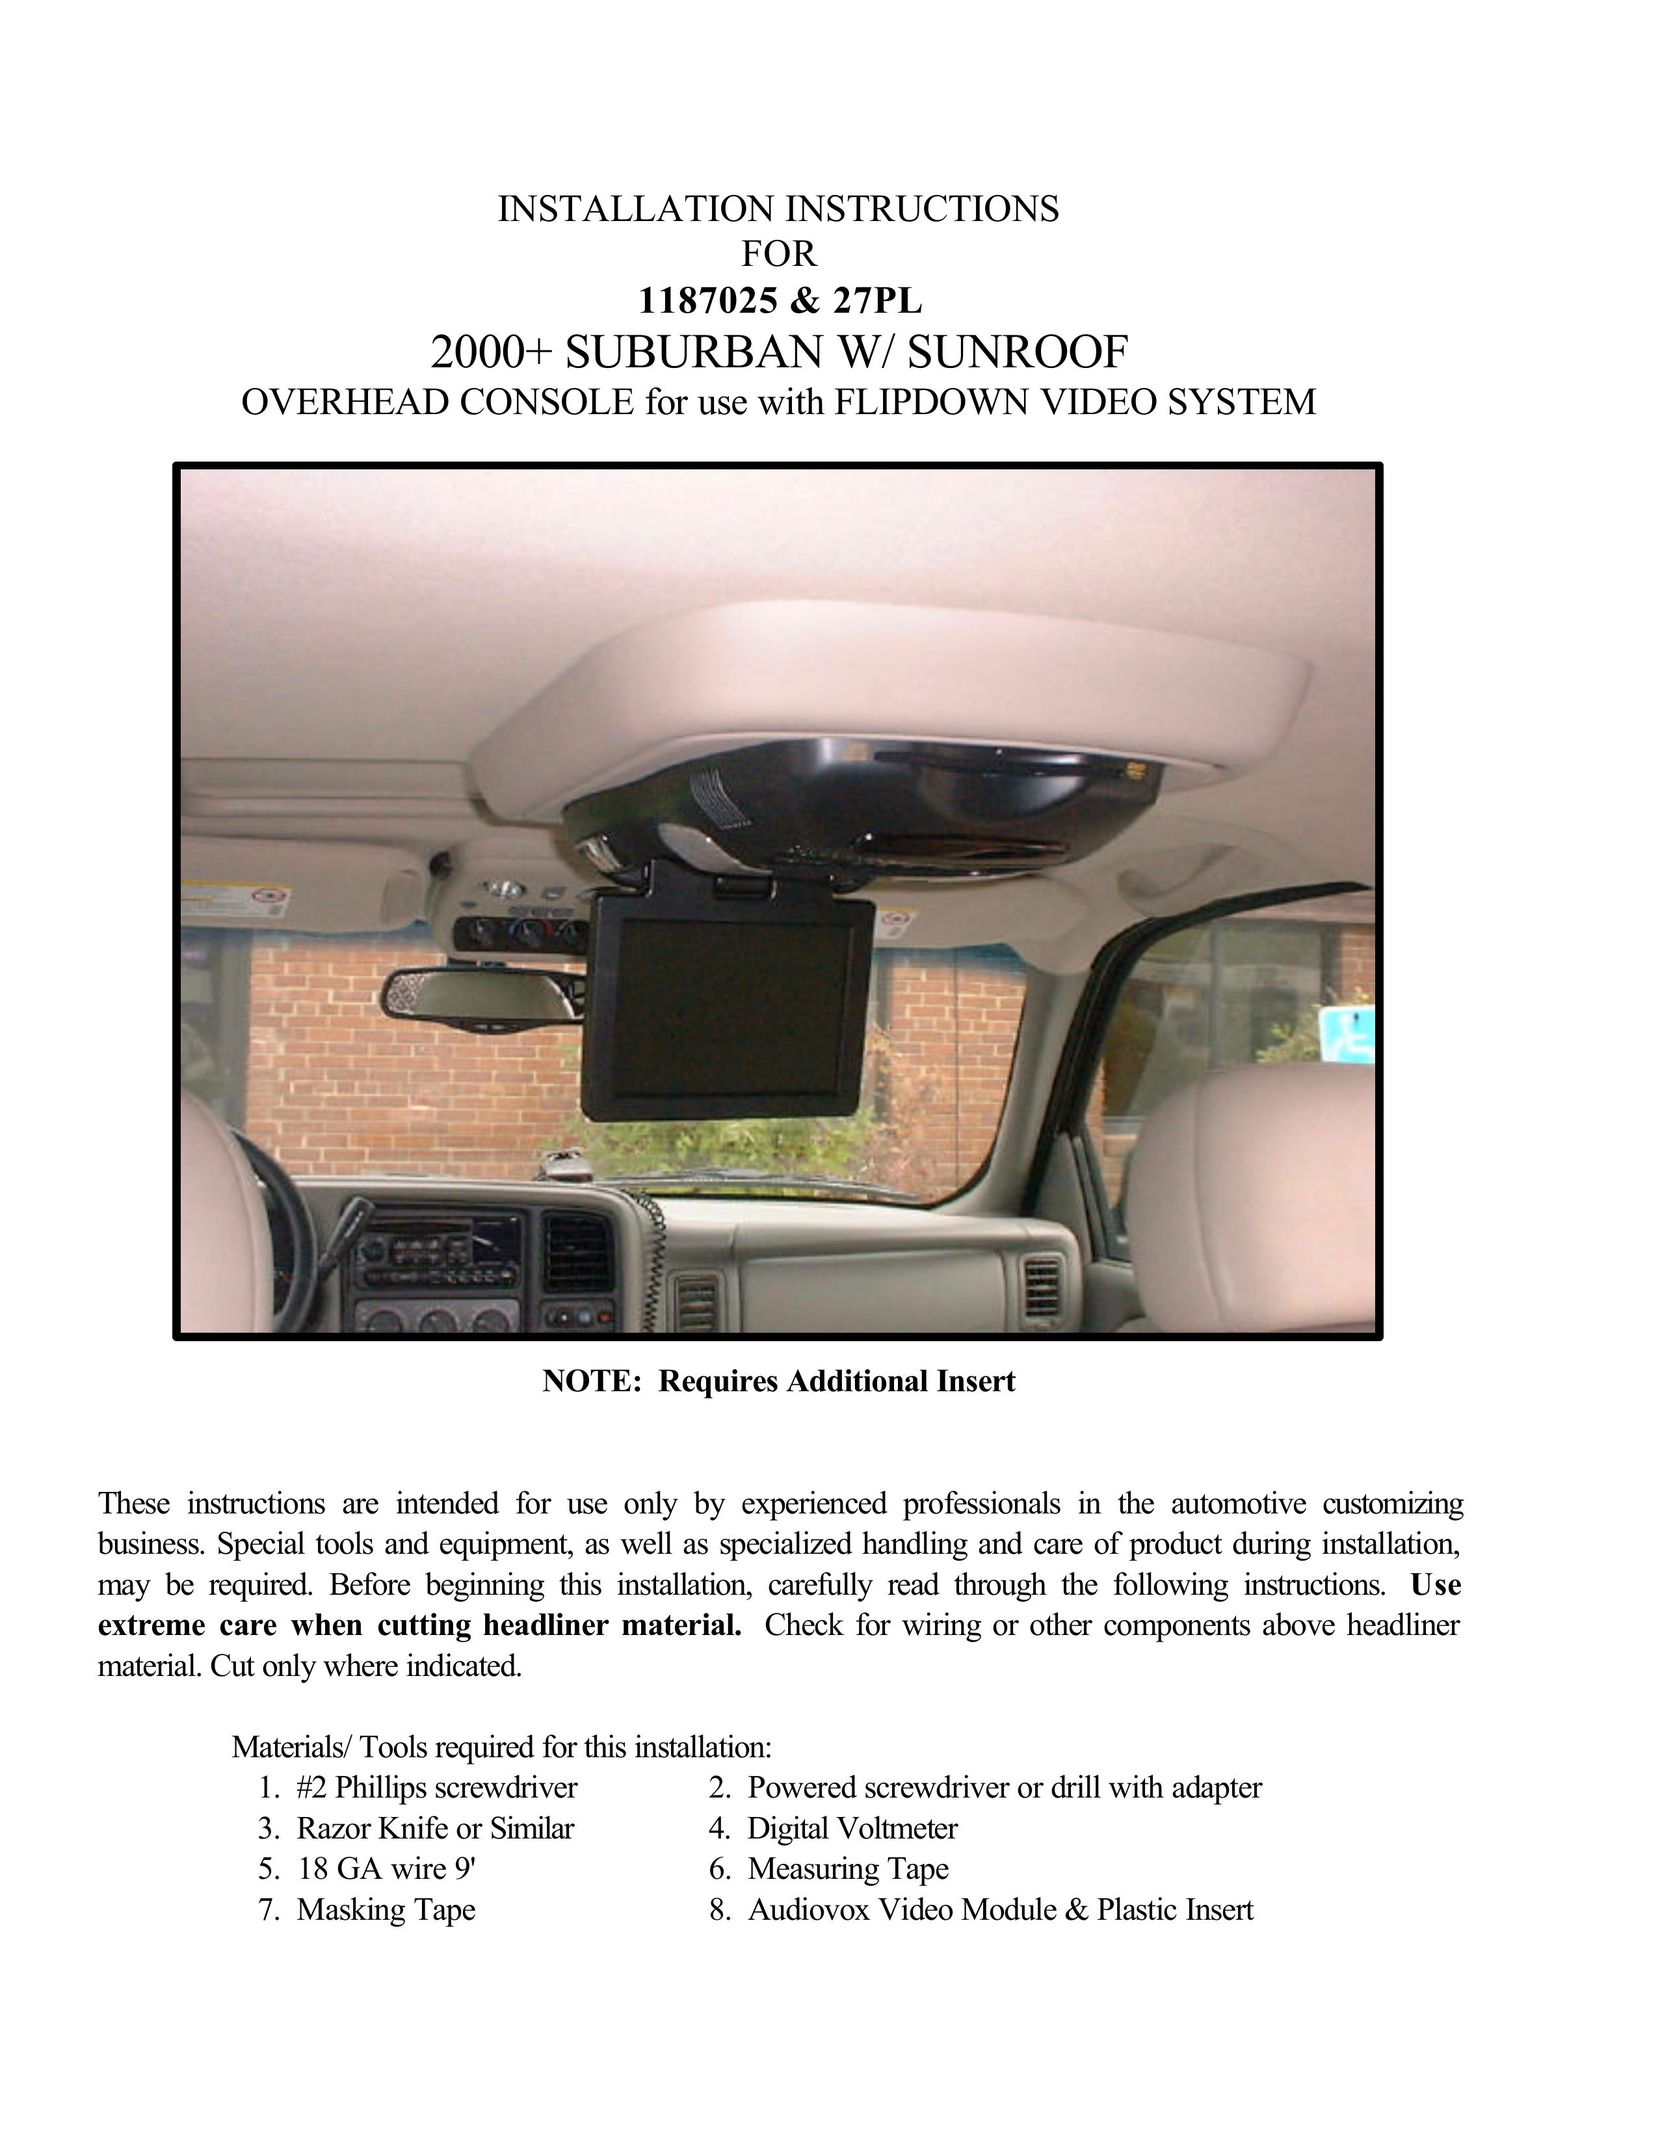 Audiovox 27PL Car Video System User Manual